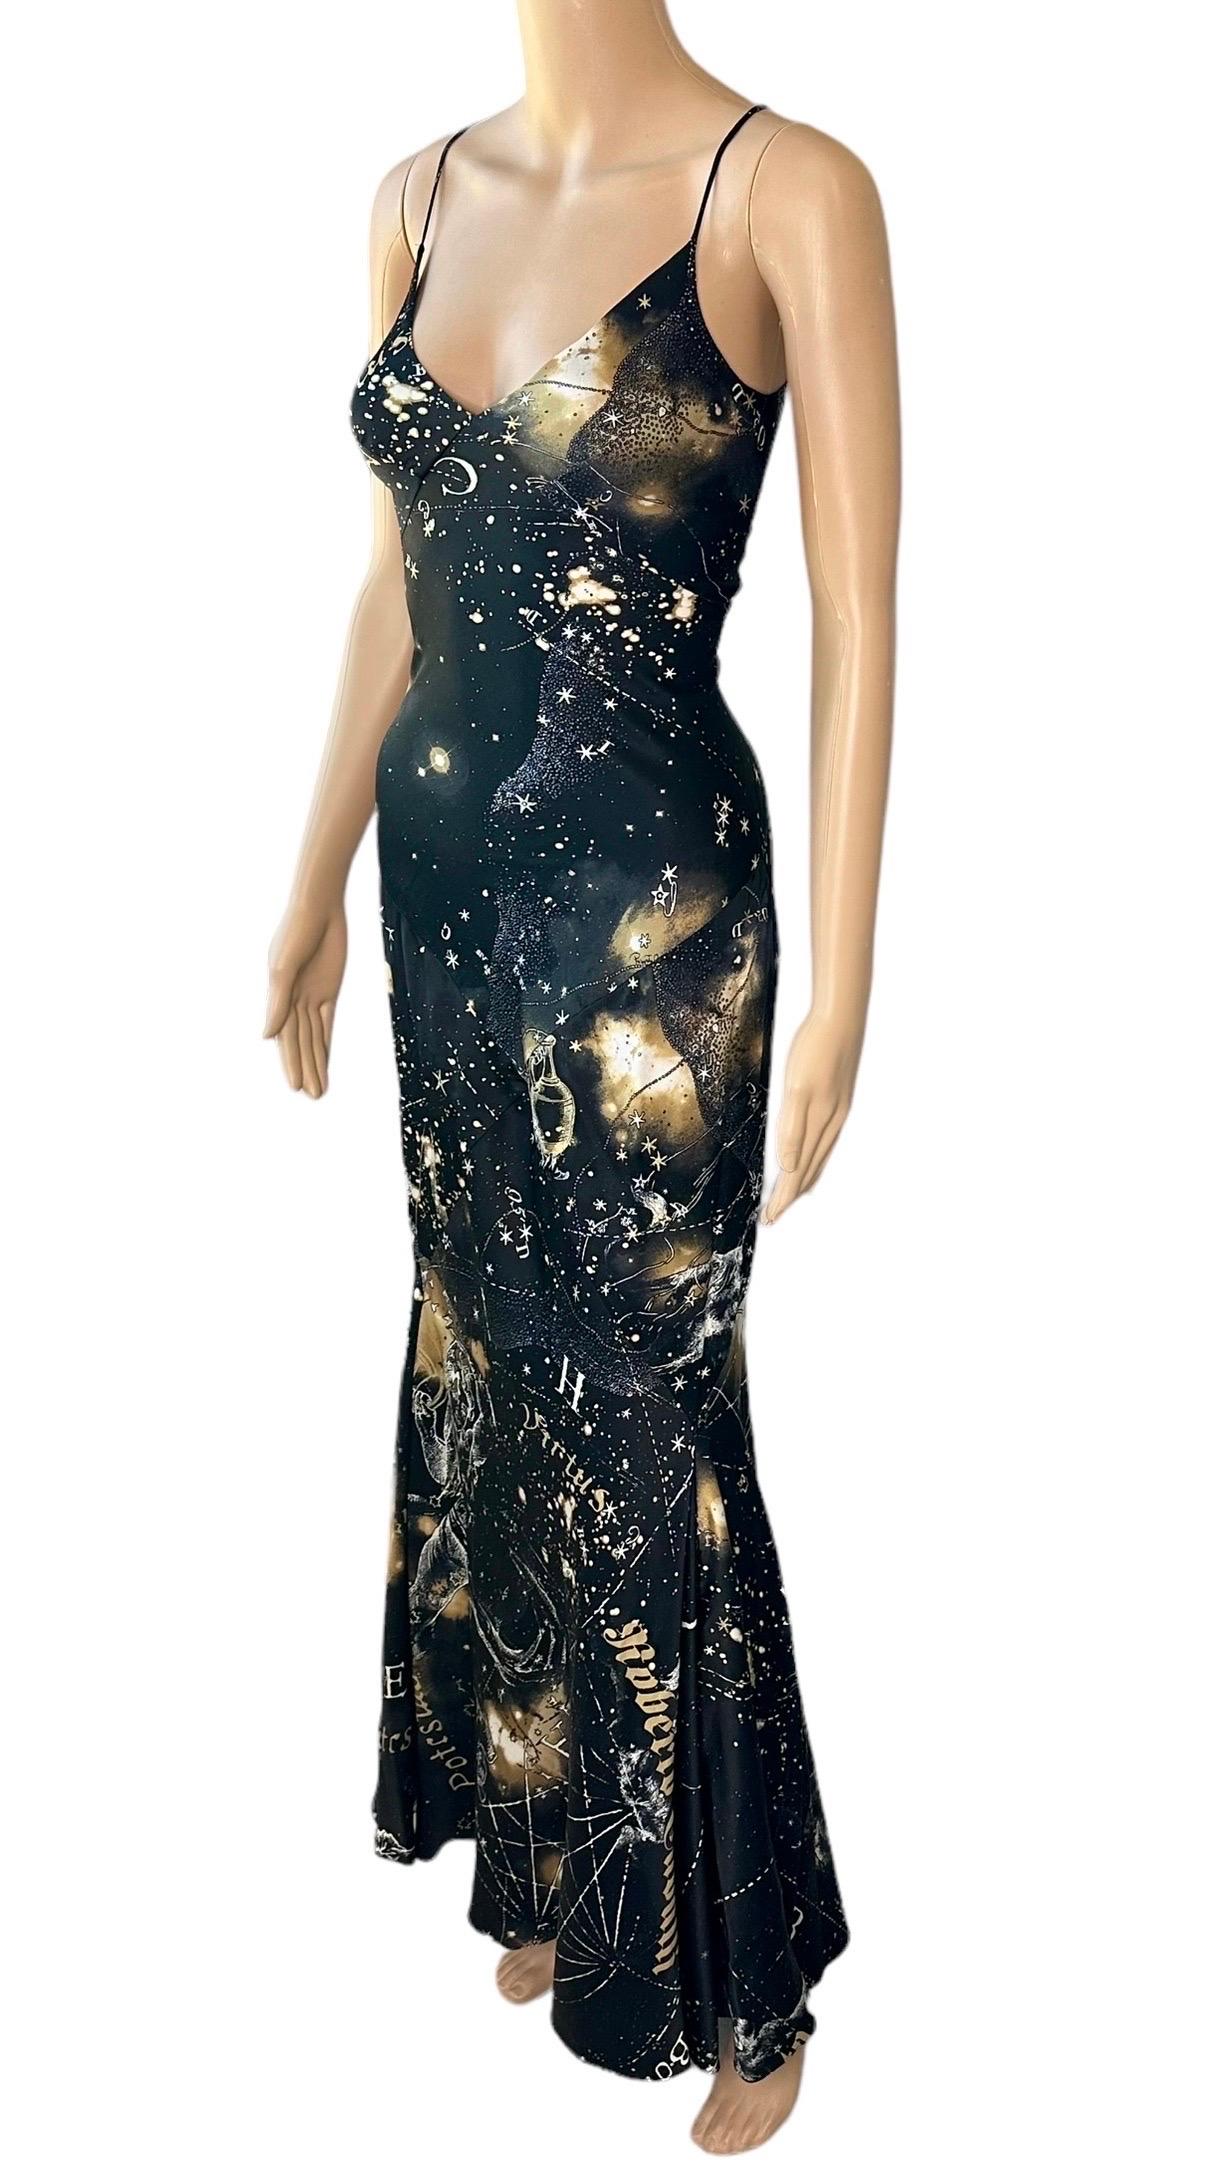 Roberto Cavalli F/W 2003 Constellation Zodiac Print Slip Silk Maxi Evening Dress Gown

Size: Small

Condition: Very Good Vintage Condition

FOLLOW US ON INSTAGRAM @OPULENTADDICT